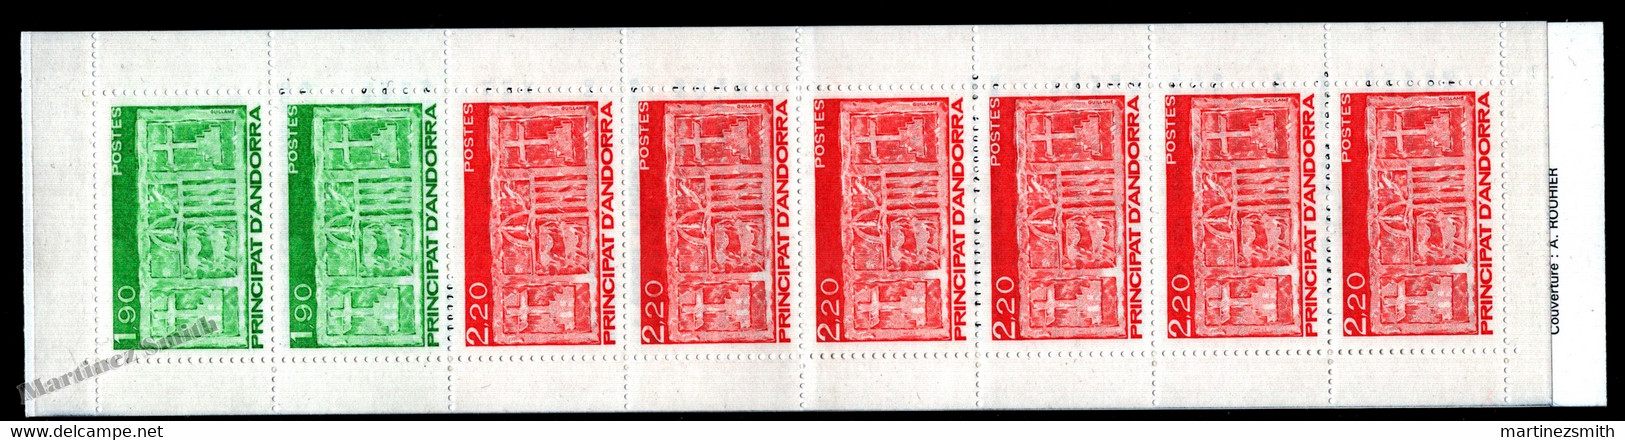 Andorre Français / French Andorra 1987 Yv. C 1, 8 Stamp Booklet 356 & 357 - MNH - Carnets